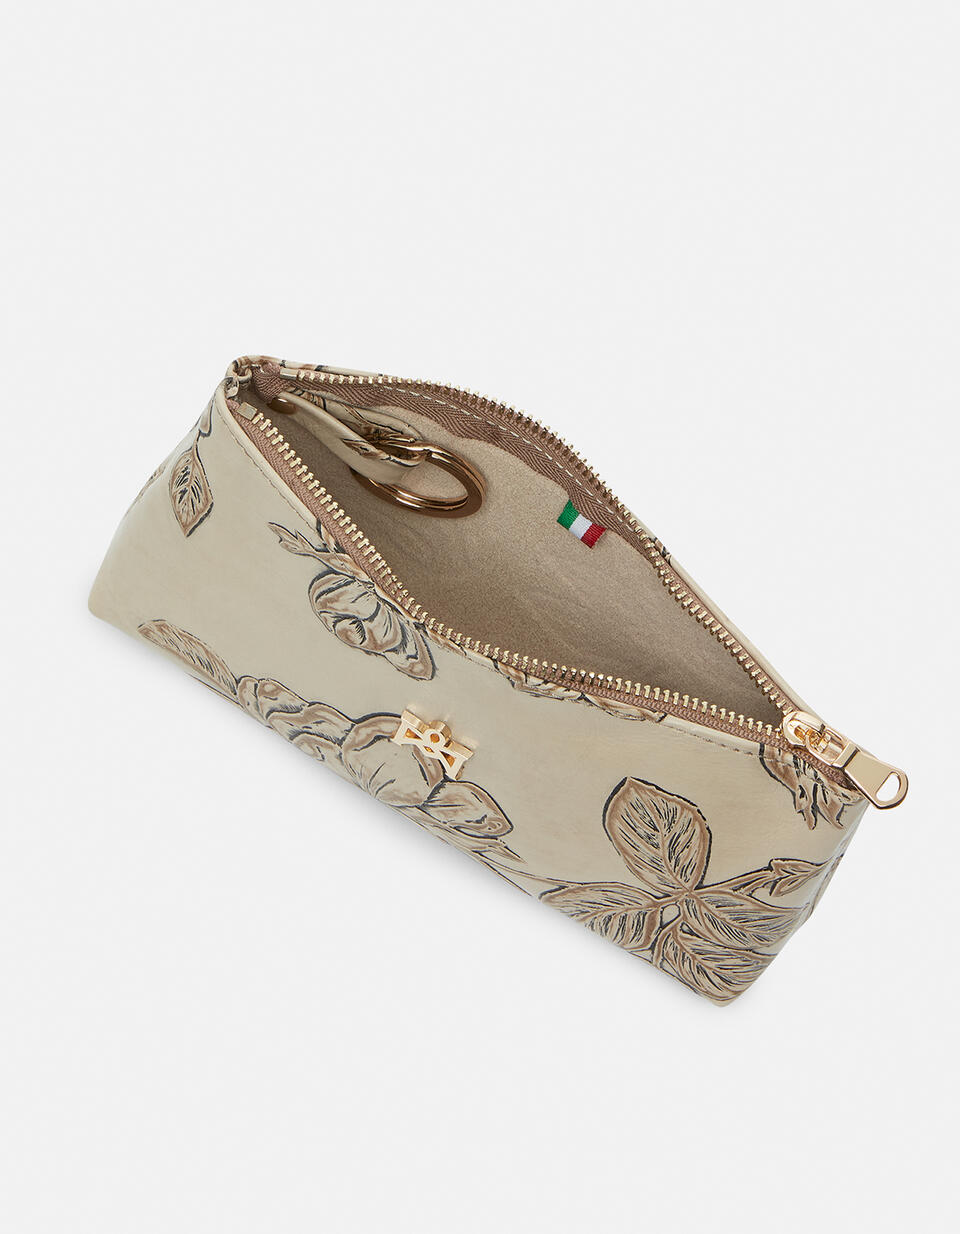 Large purse - Key holders - Women's Accessories | Accessories Mimì TAUPE - Key holders - Women's Accessories | AccessoriesCuoieria Fiorentina